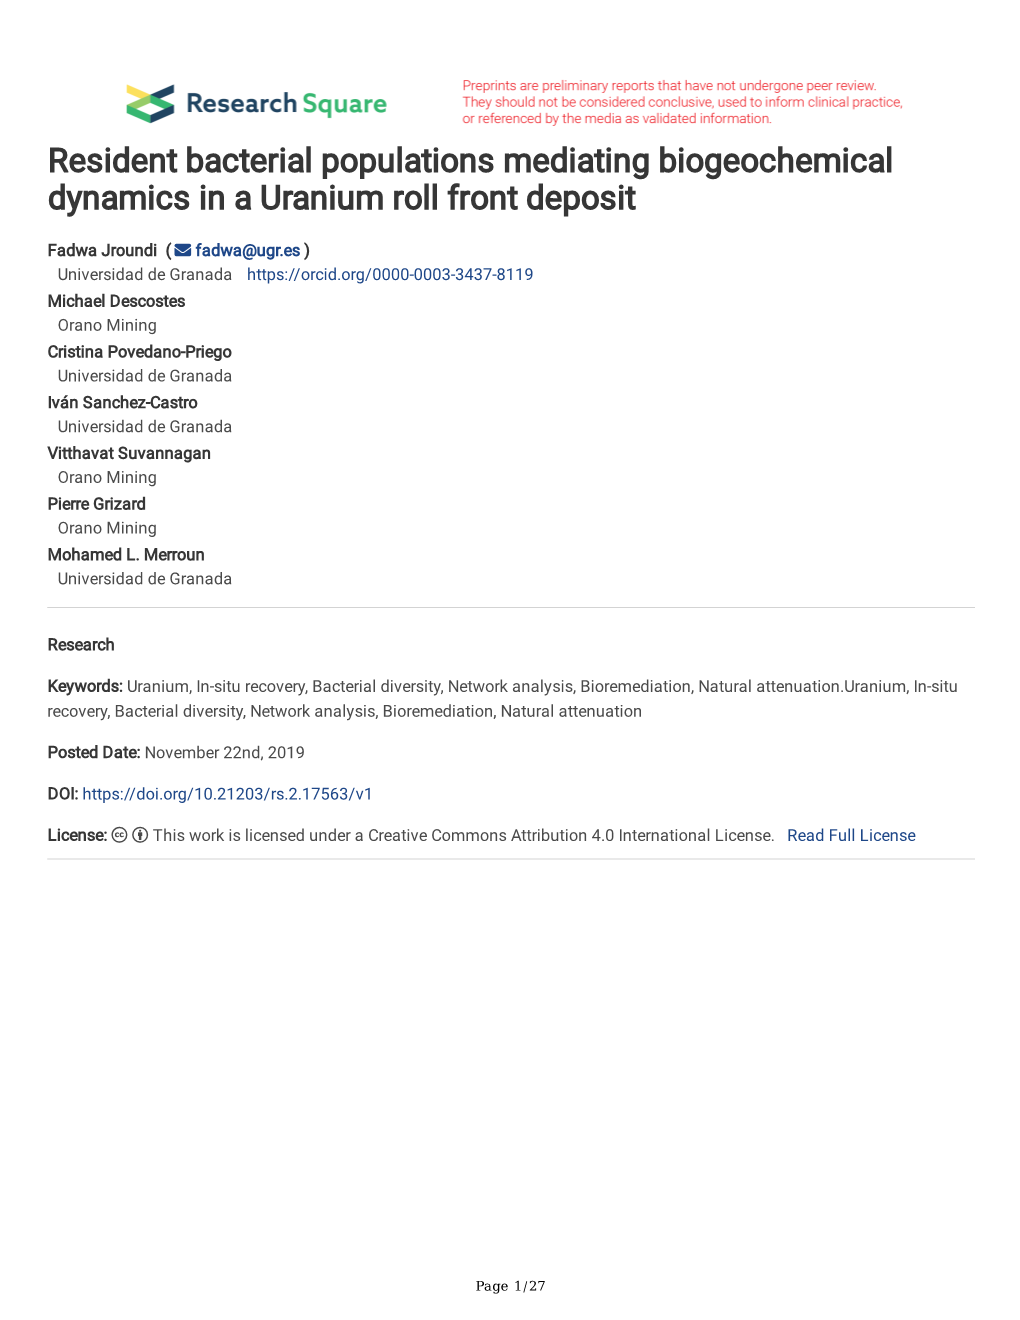 Resident Bacterial Populations Mediating Biogeochemical Dynamics in a Uranium Roll Front Deposit